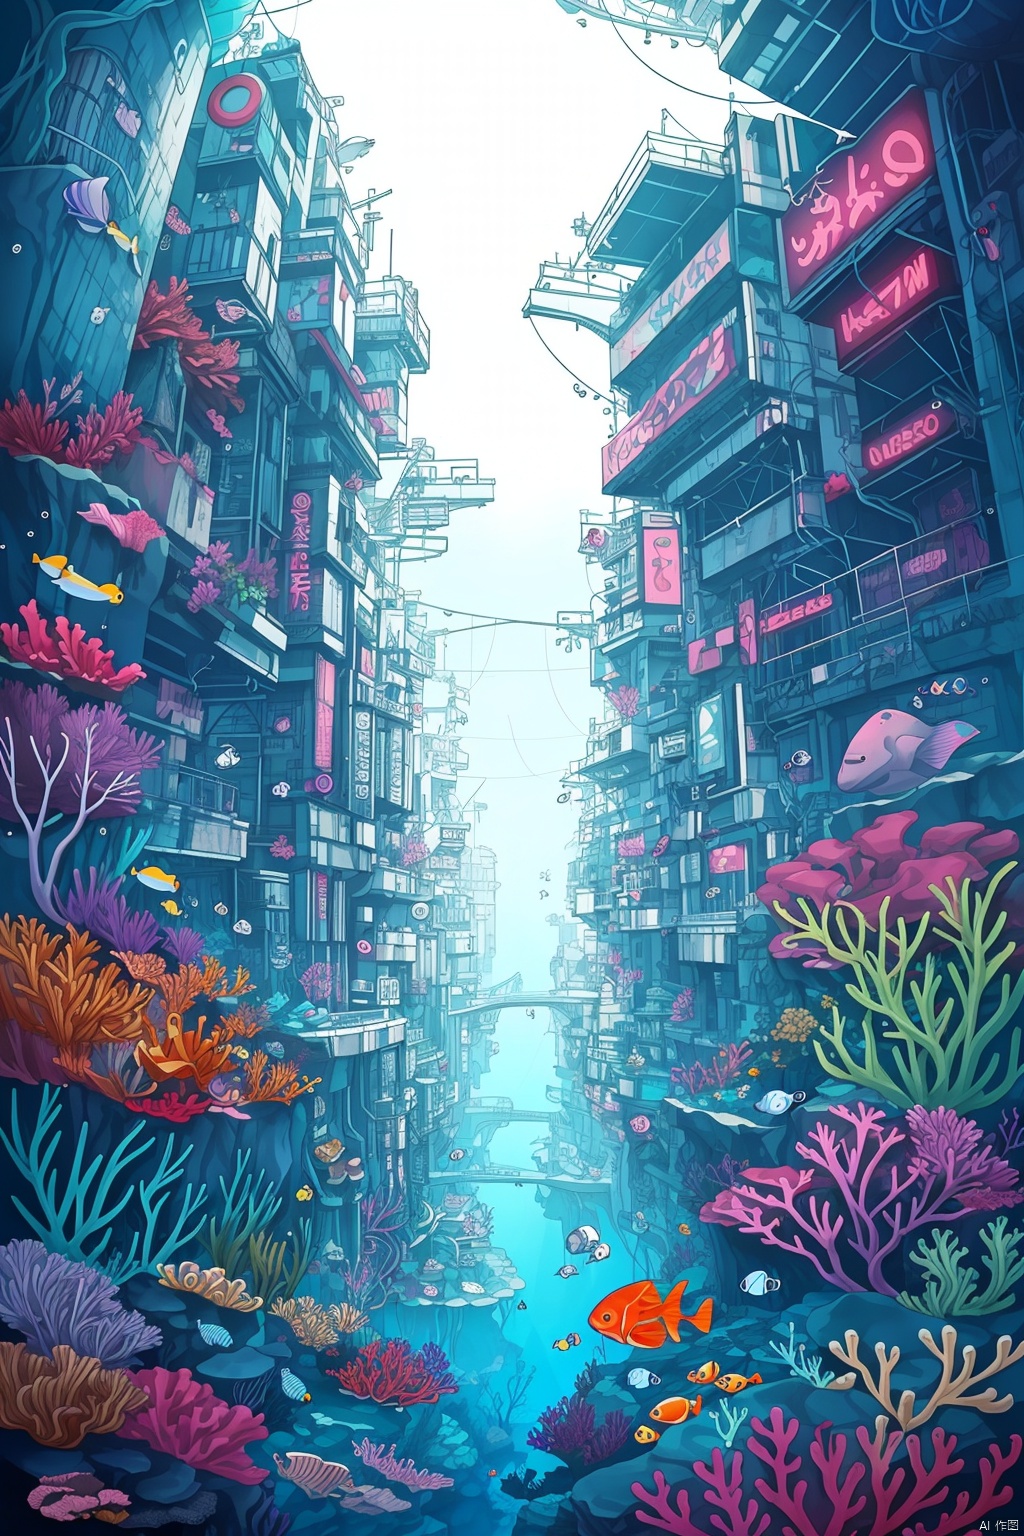 (under the sea:1.2),many fishes around the ocean,(cyberpunk),the city under the ocean,(masterpiece:1.2),magic ocean,scene,game,mysterious,hidden,fantastic,Atlantis,